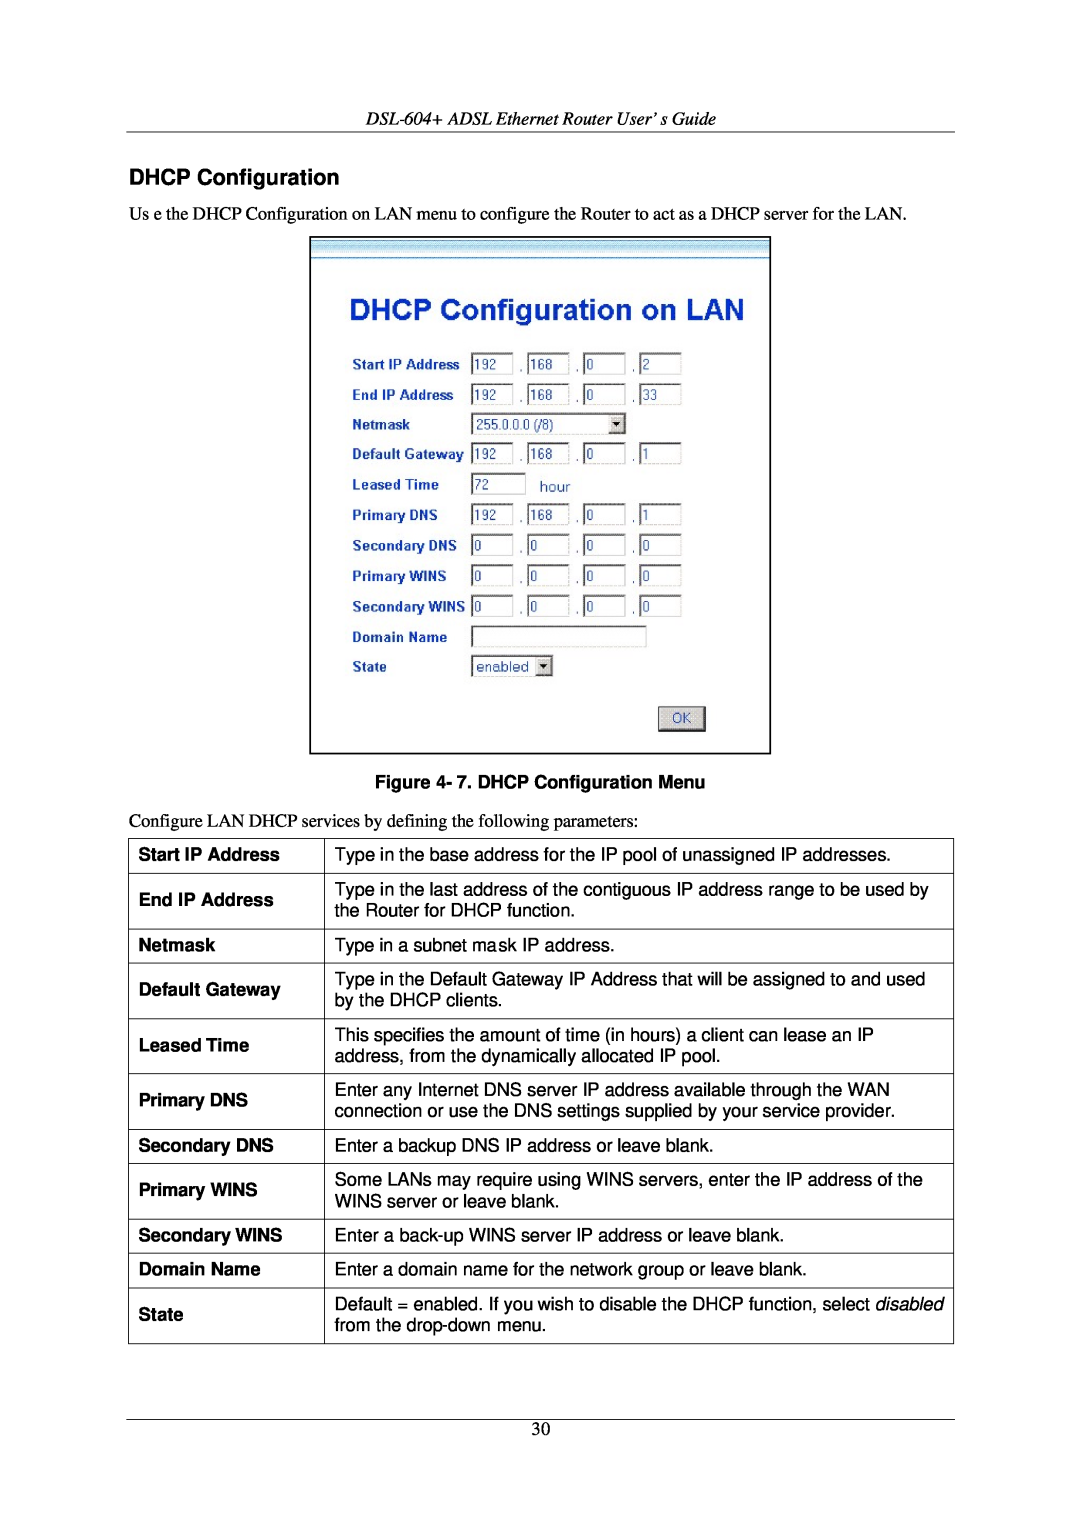 D-Link manual DHCP Configuration, DSL-604+ ADSL Ethernet Router User’s Guide 